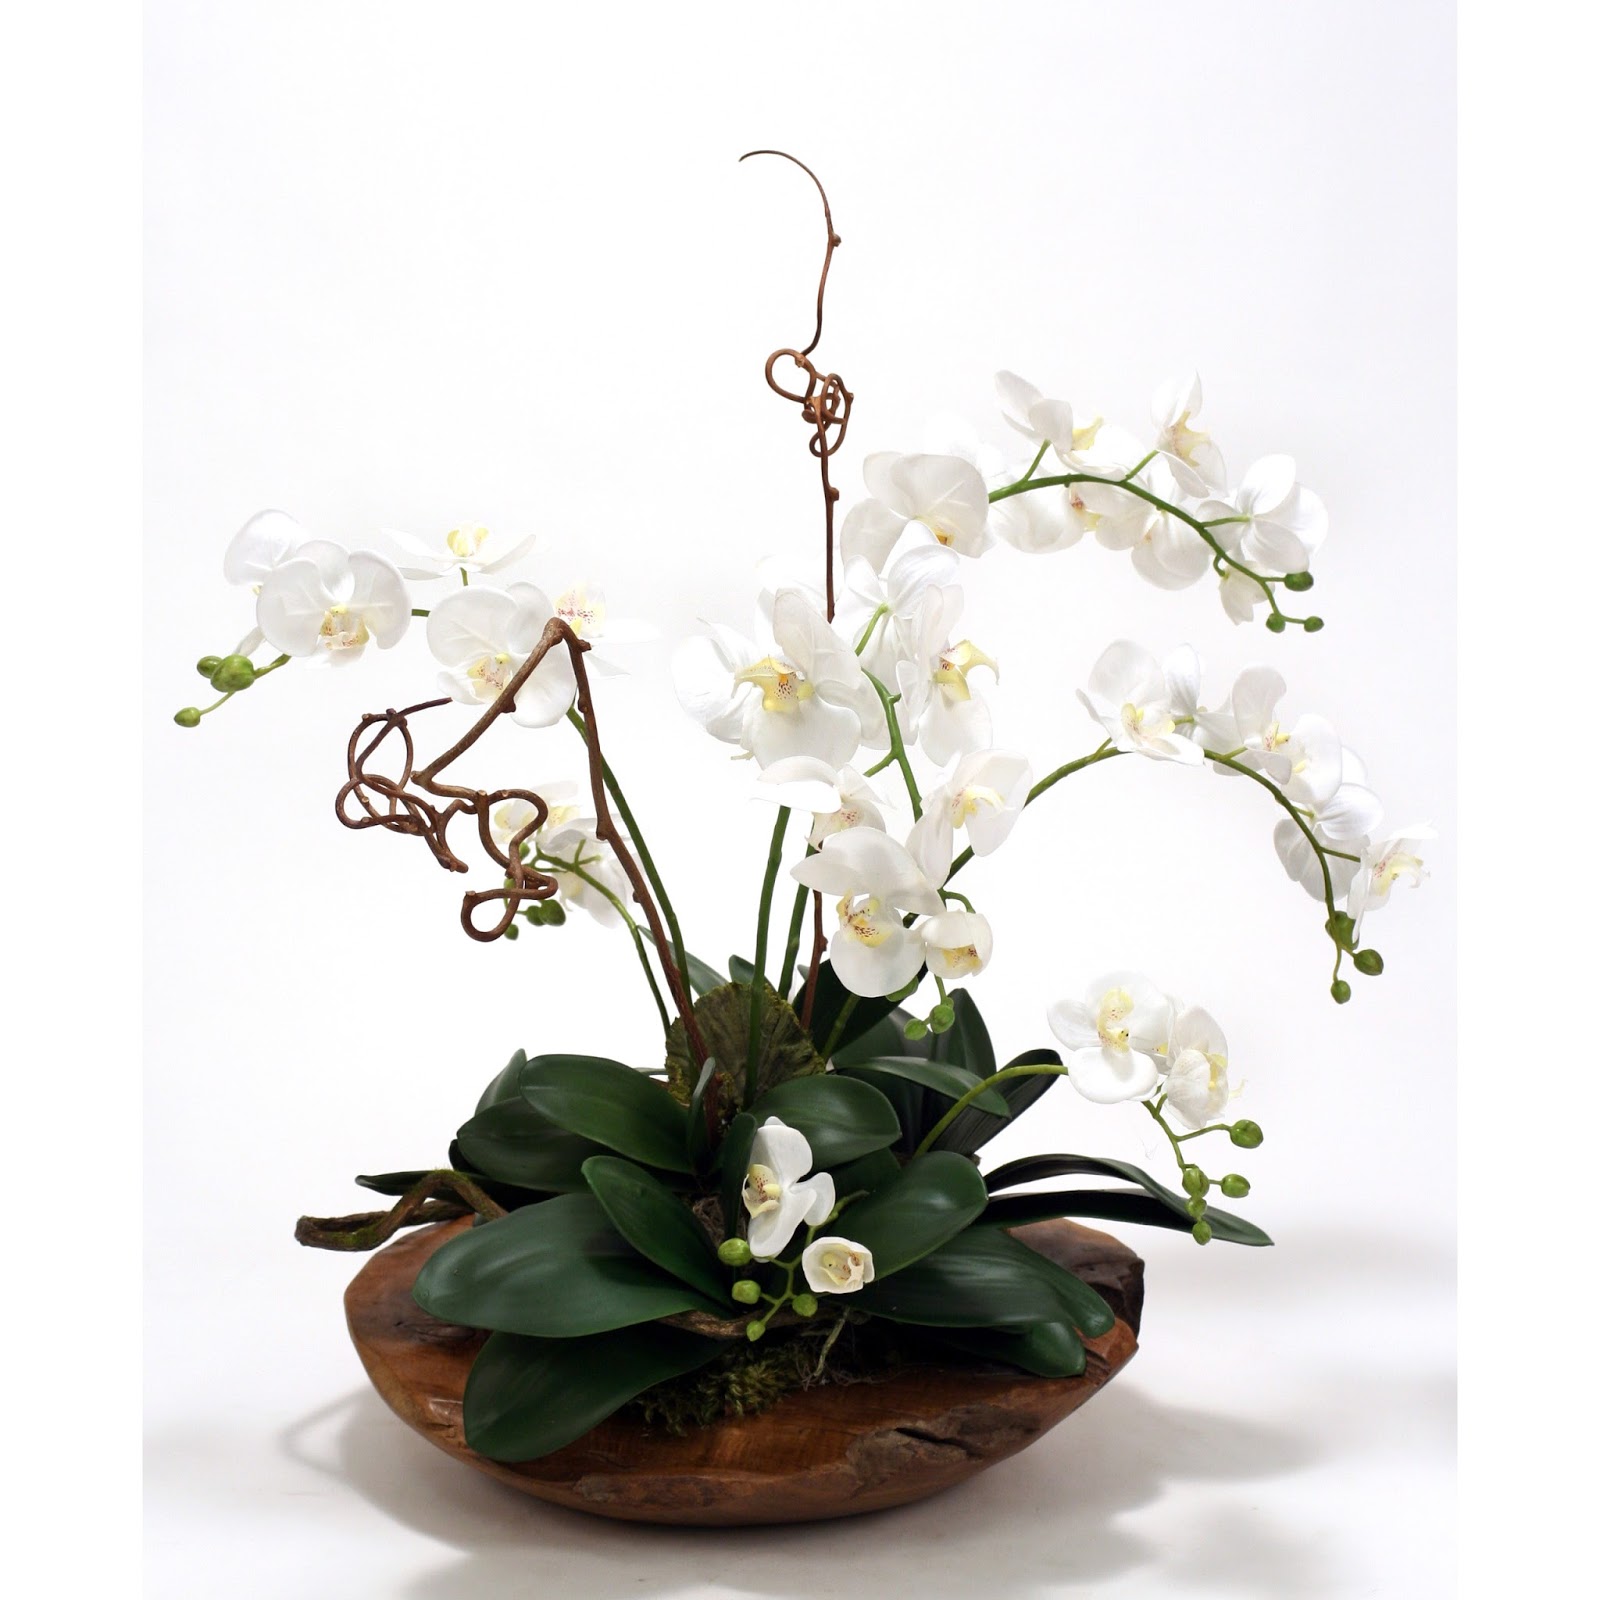  Hiasan  Orkid  Yang Amat Menarik dan Kreatif MyRokan